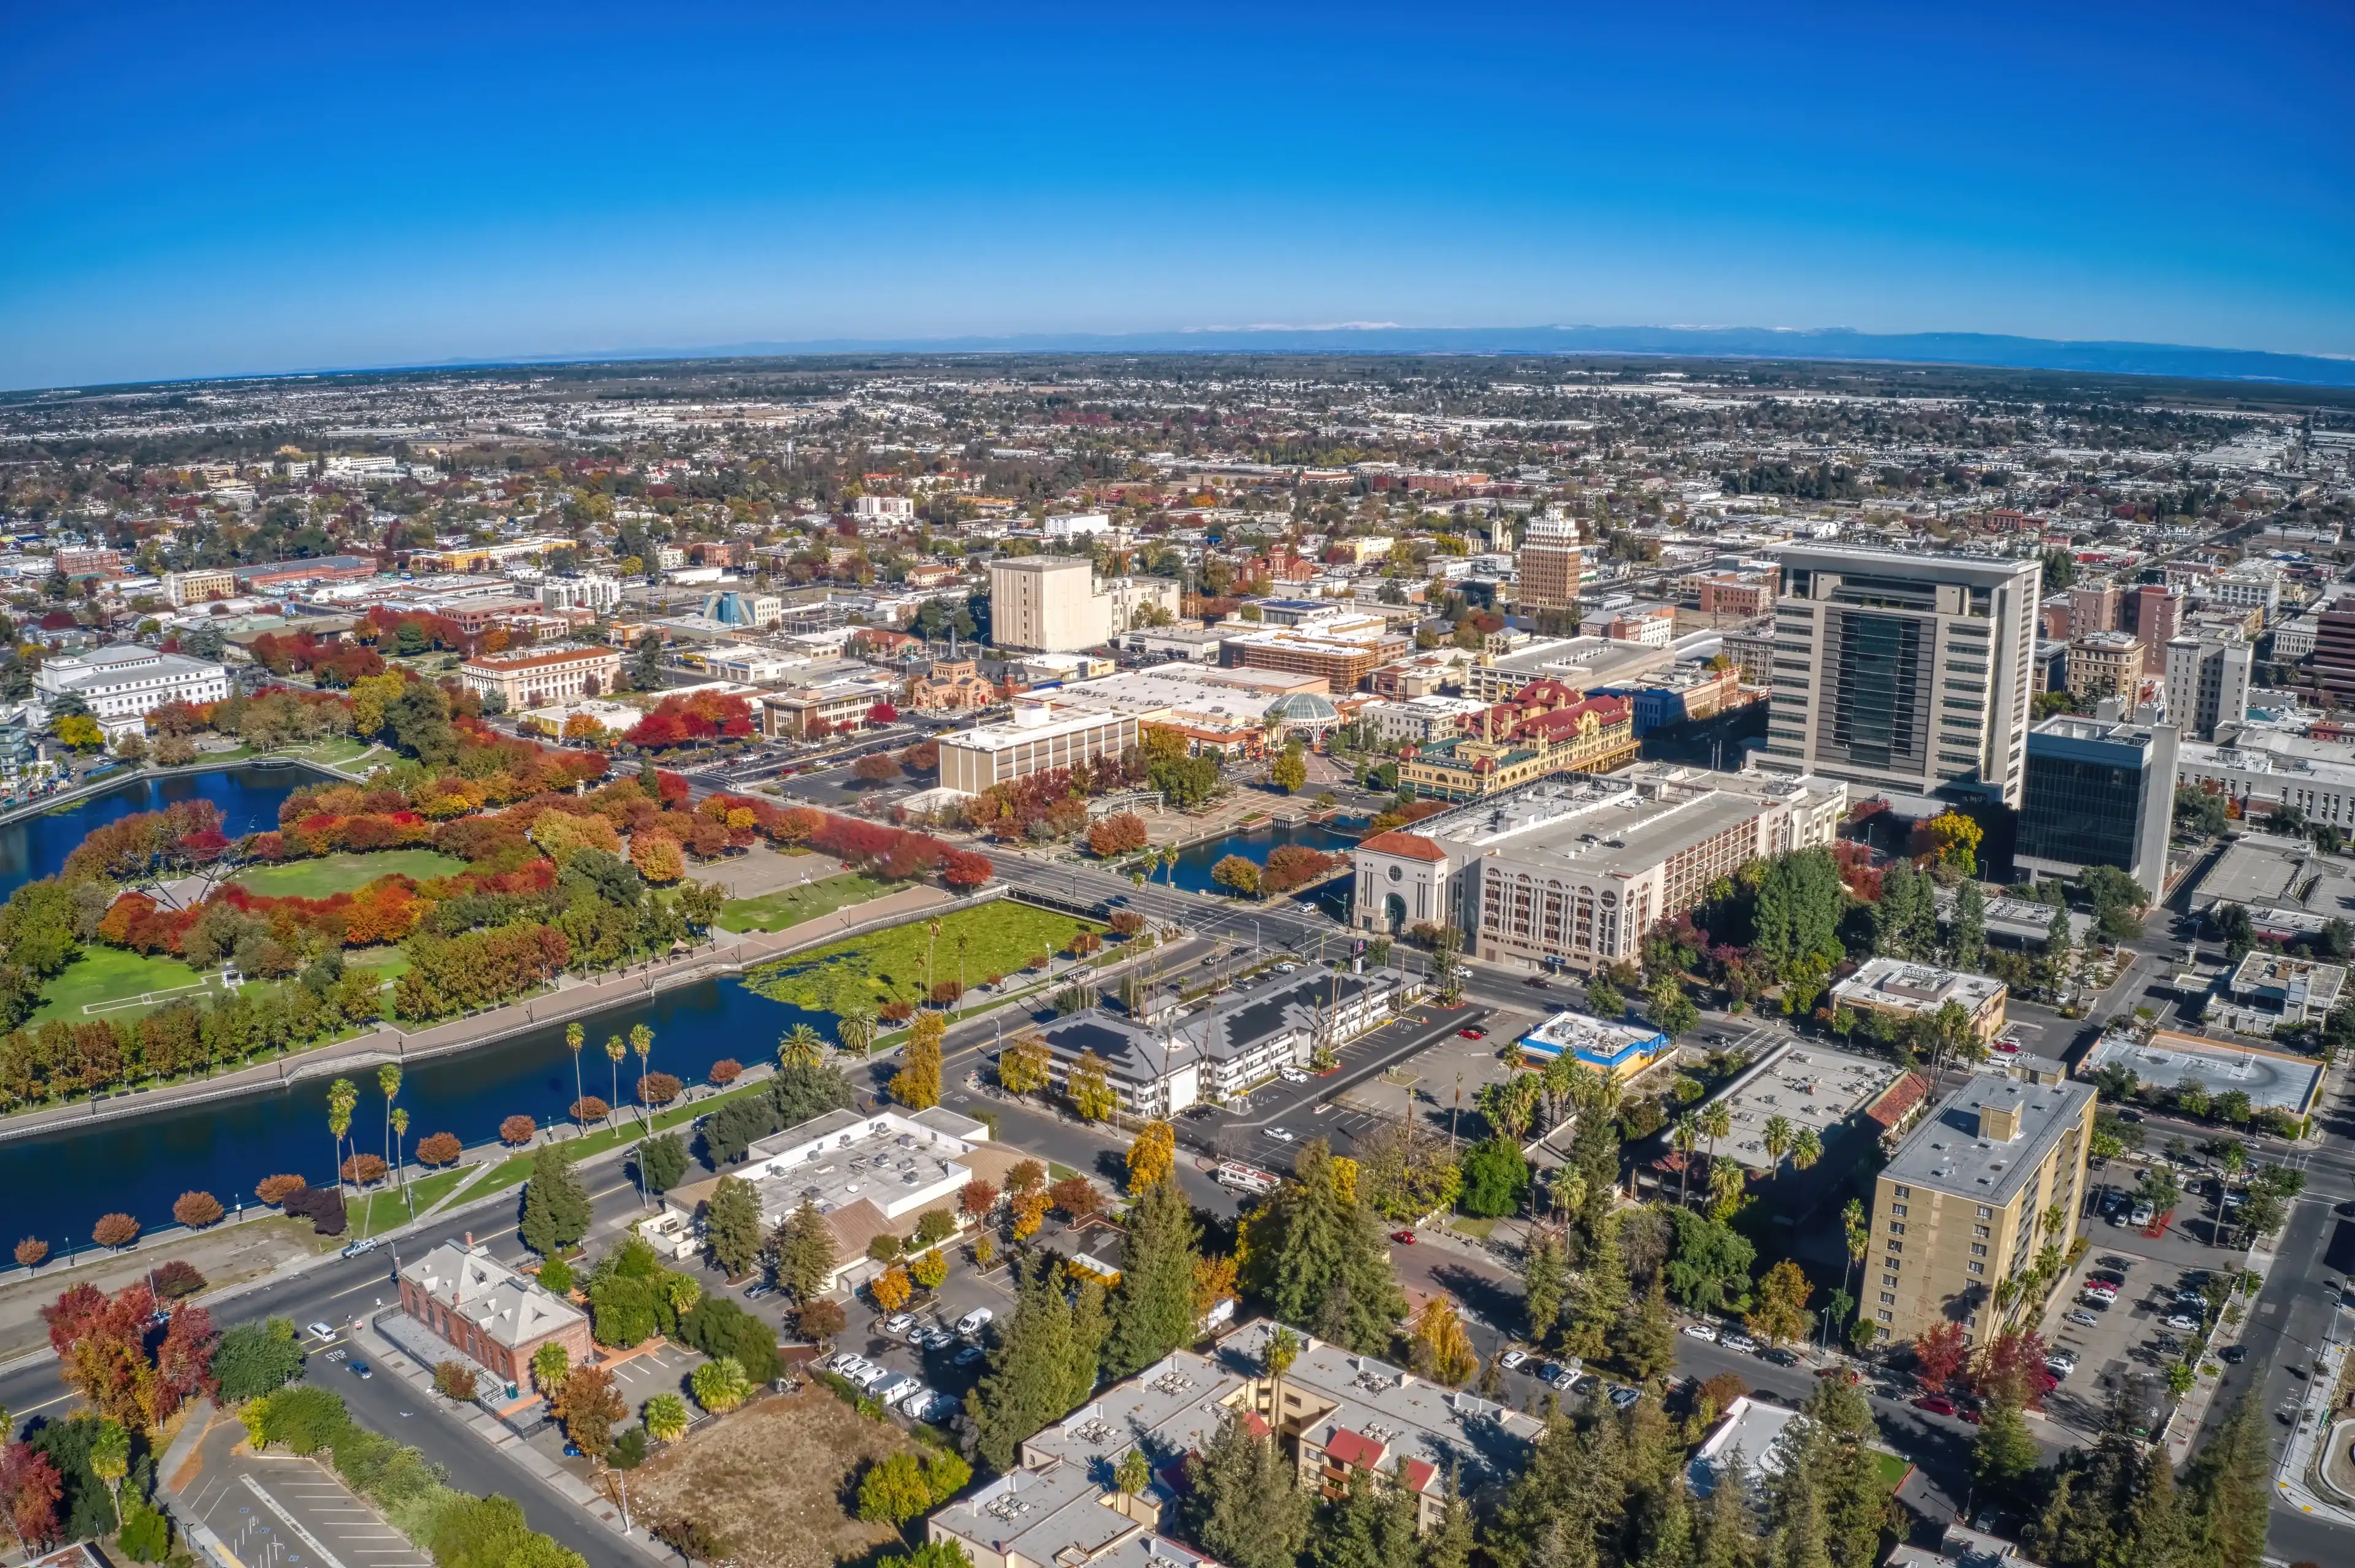 Aerial View of Stockton, California during Autumn